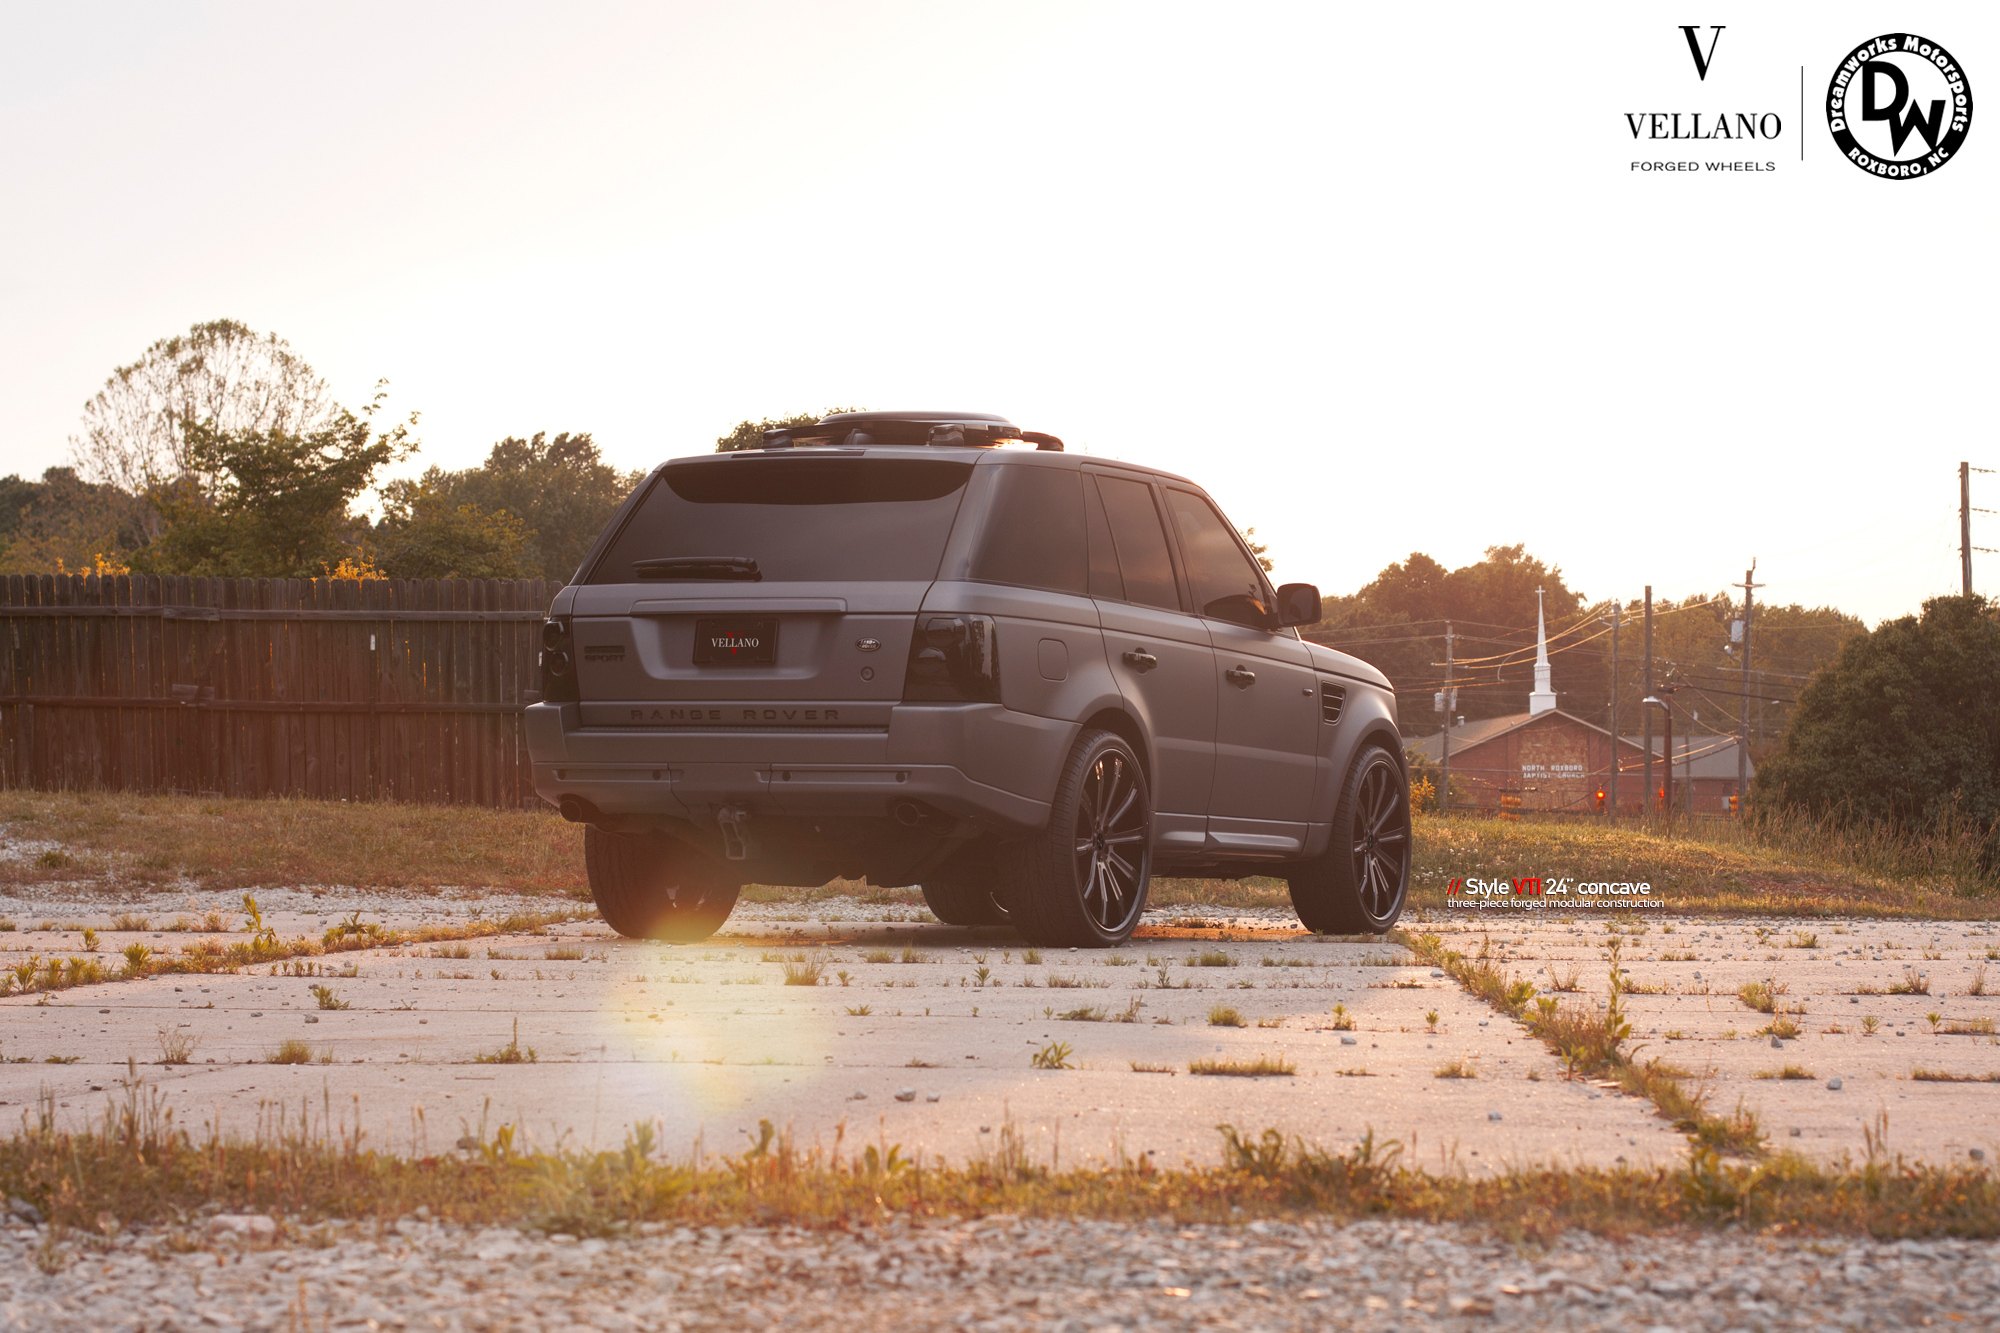 Dark Smoke Taillights on Gray Range Rover Sport - Photo by Vellano